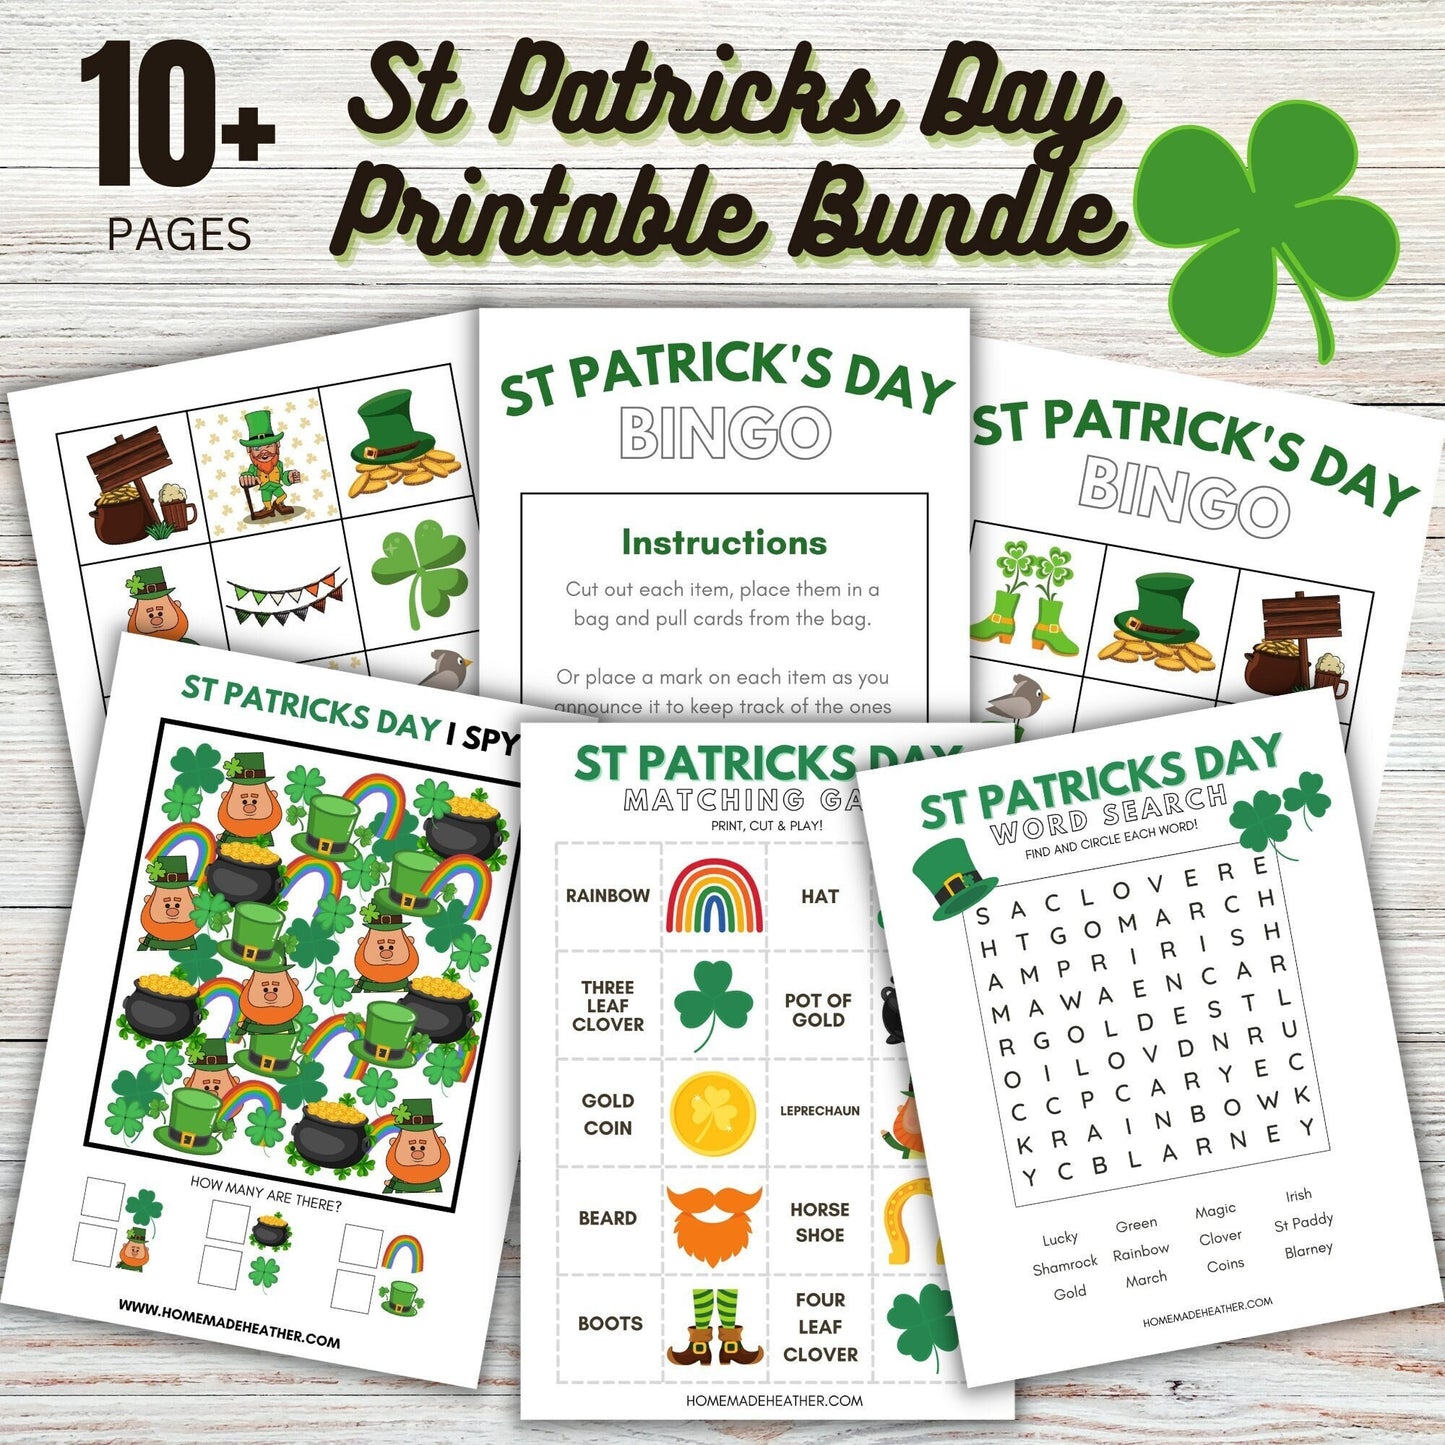 St Patricks Day Printable Activity Bundle - St Patricks Day Printable PDF - Instant Download